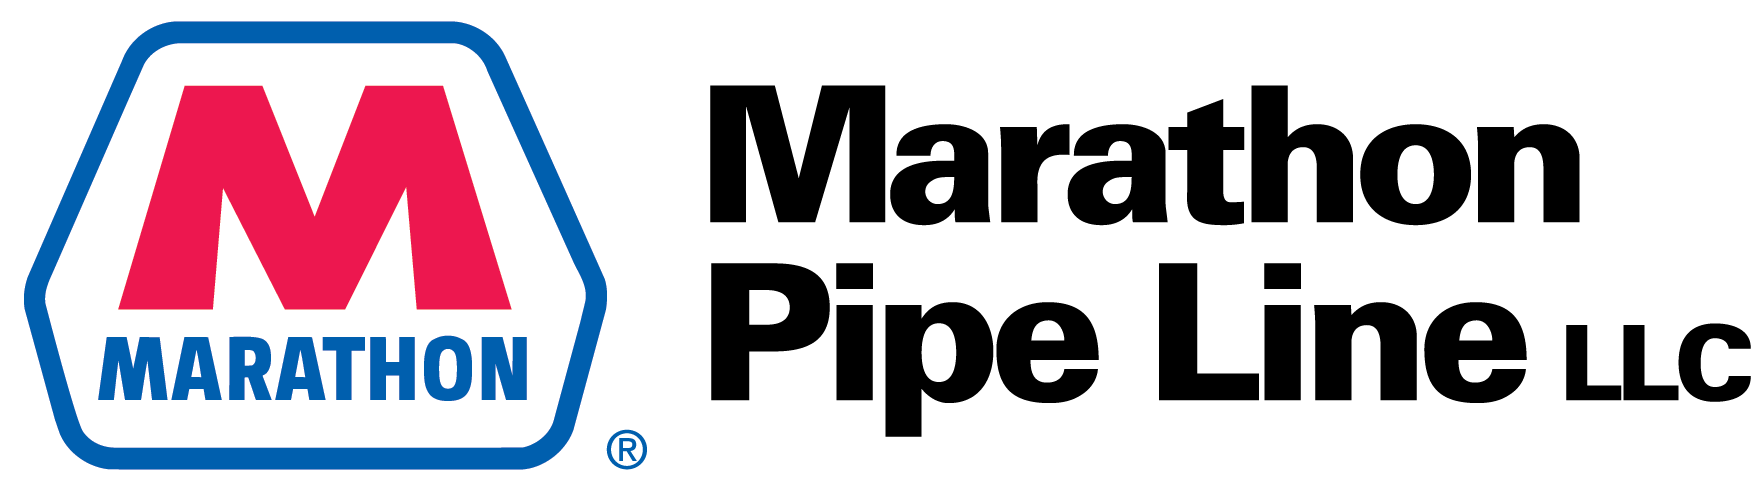 Marathon Pipeline logo.png